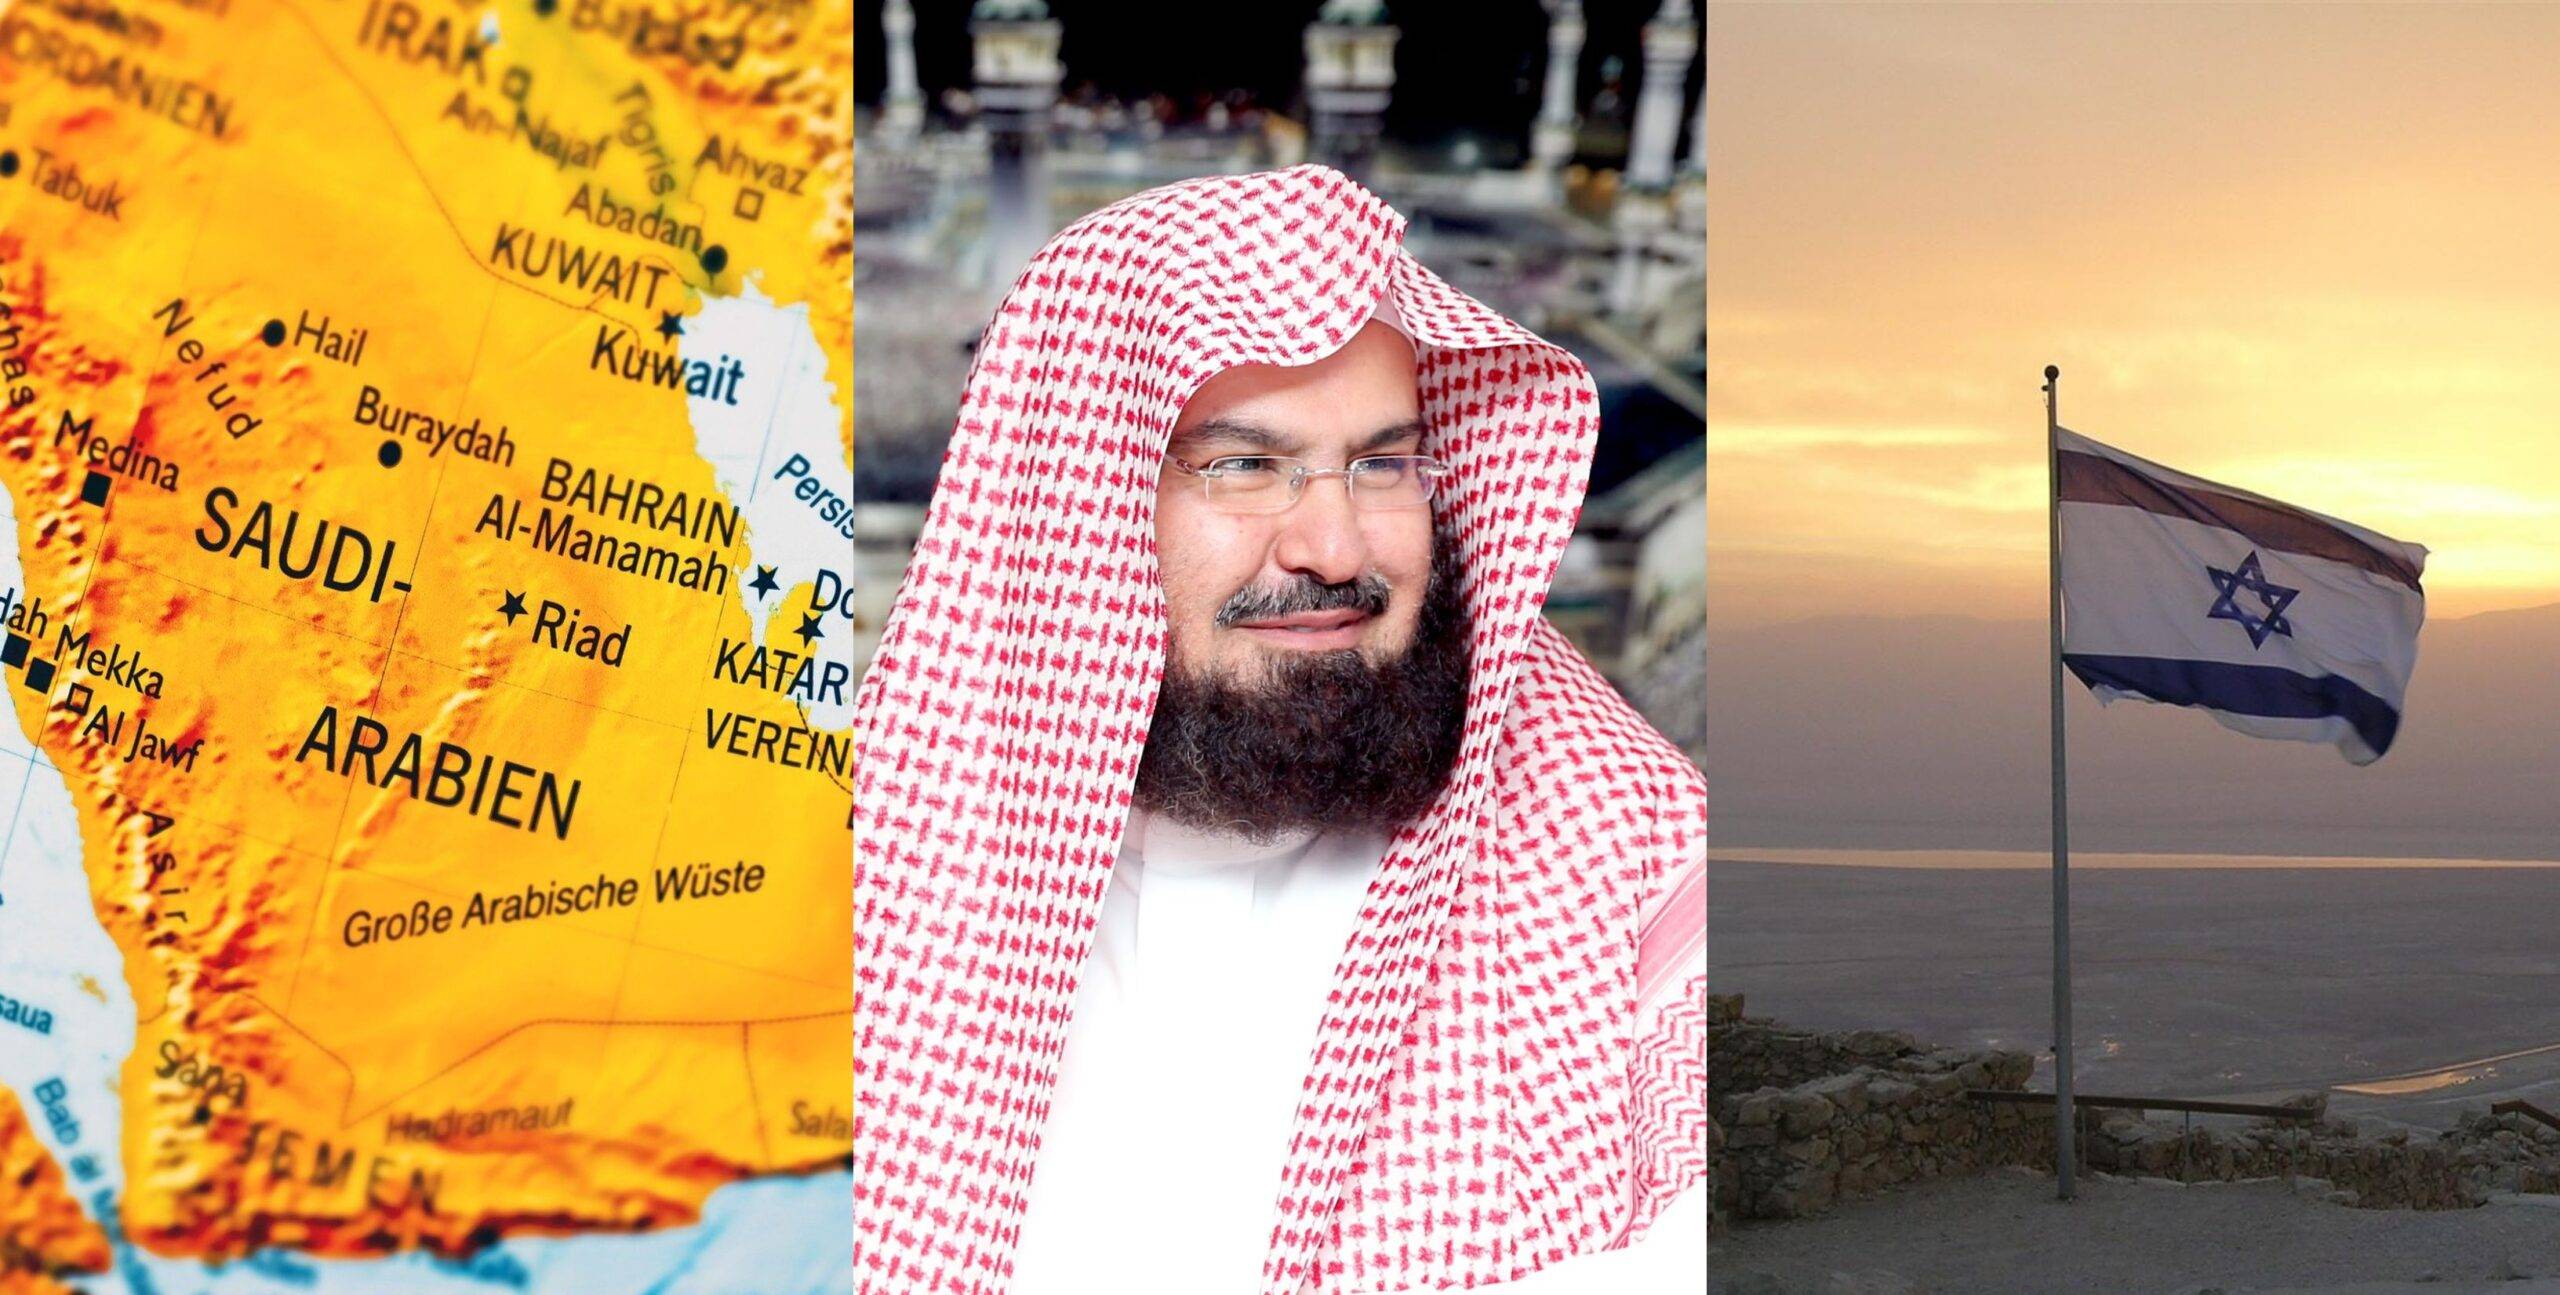 imam kaaba saudi peace deal with israel